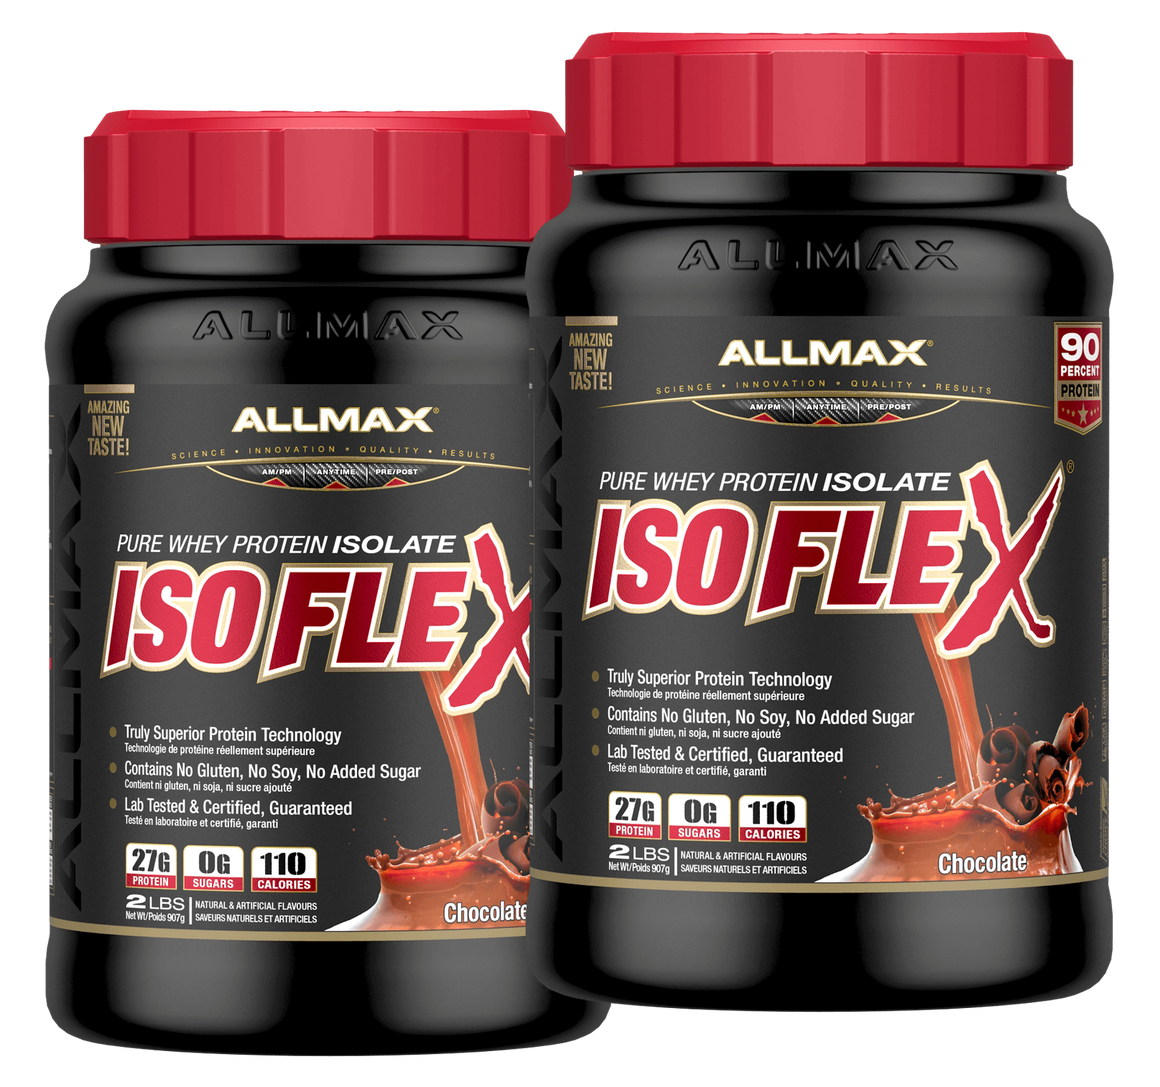 Allmax IsoFlex Whey Protein Isolate, 2 x 2lbs - 2 x 30serv